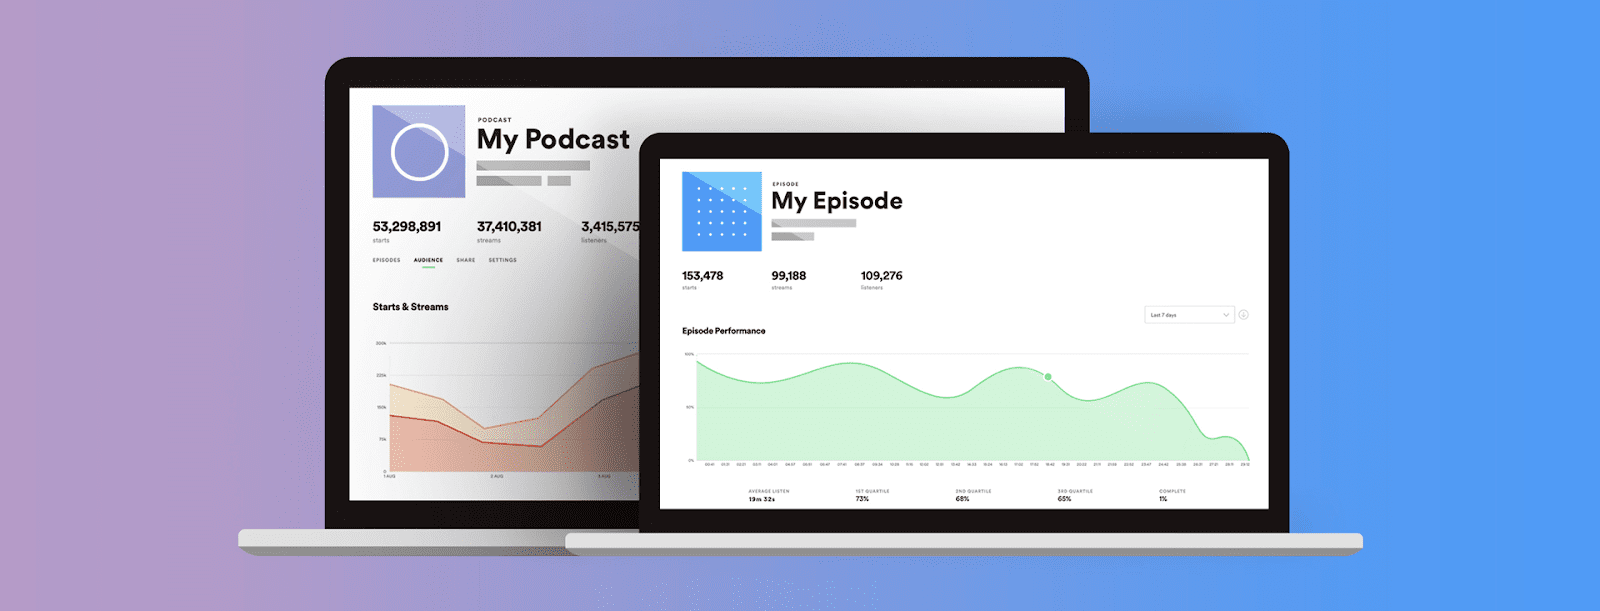 Spotify podcast analytics dashboard